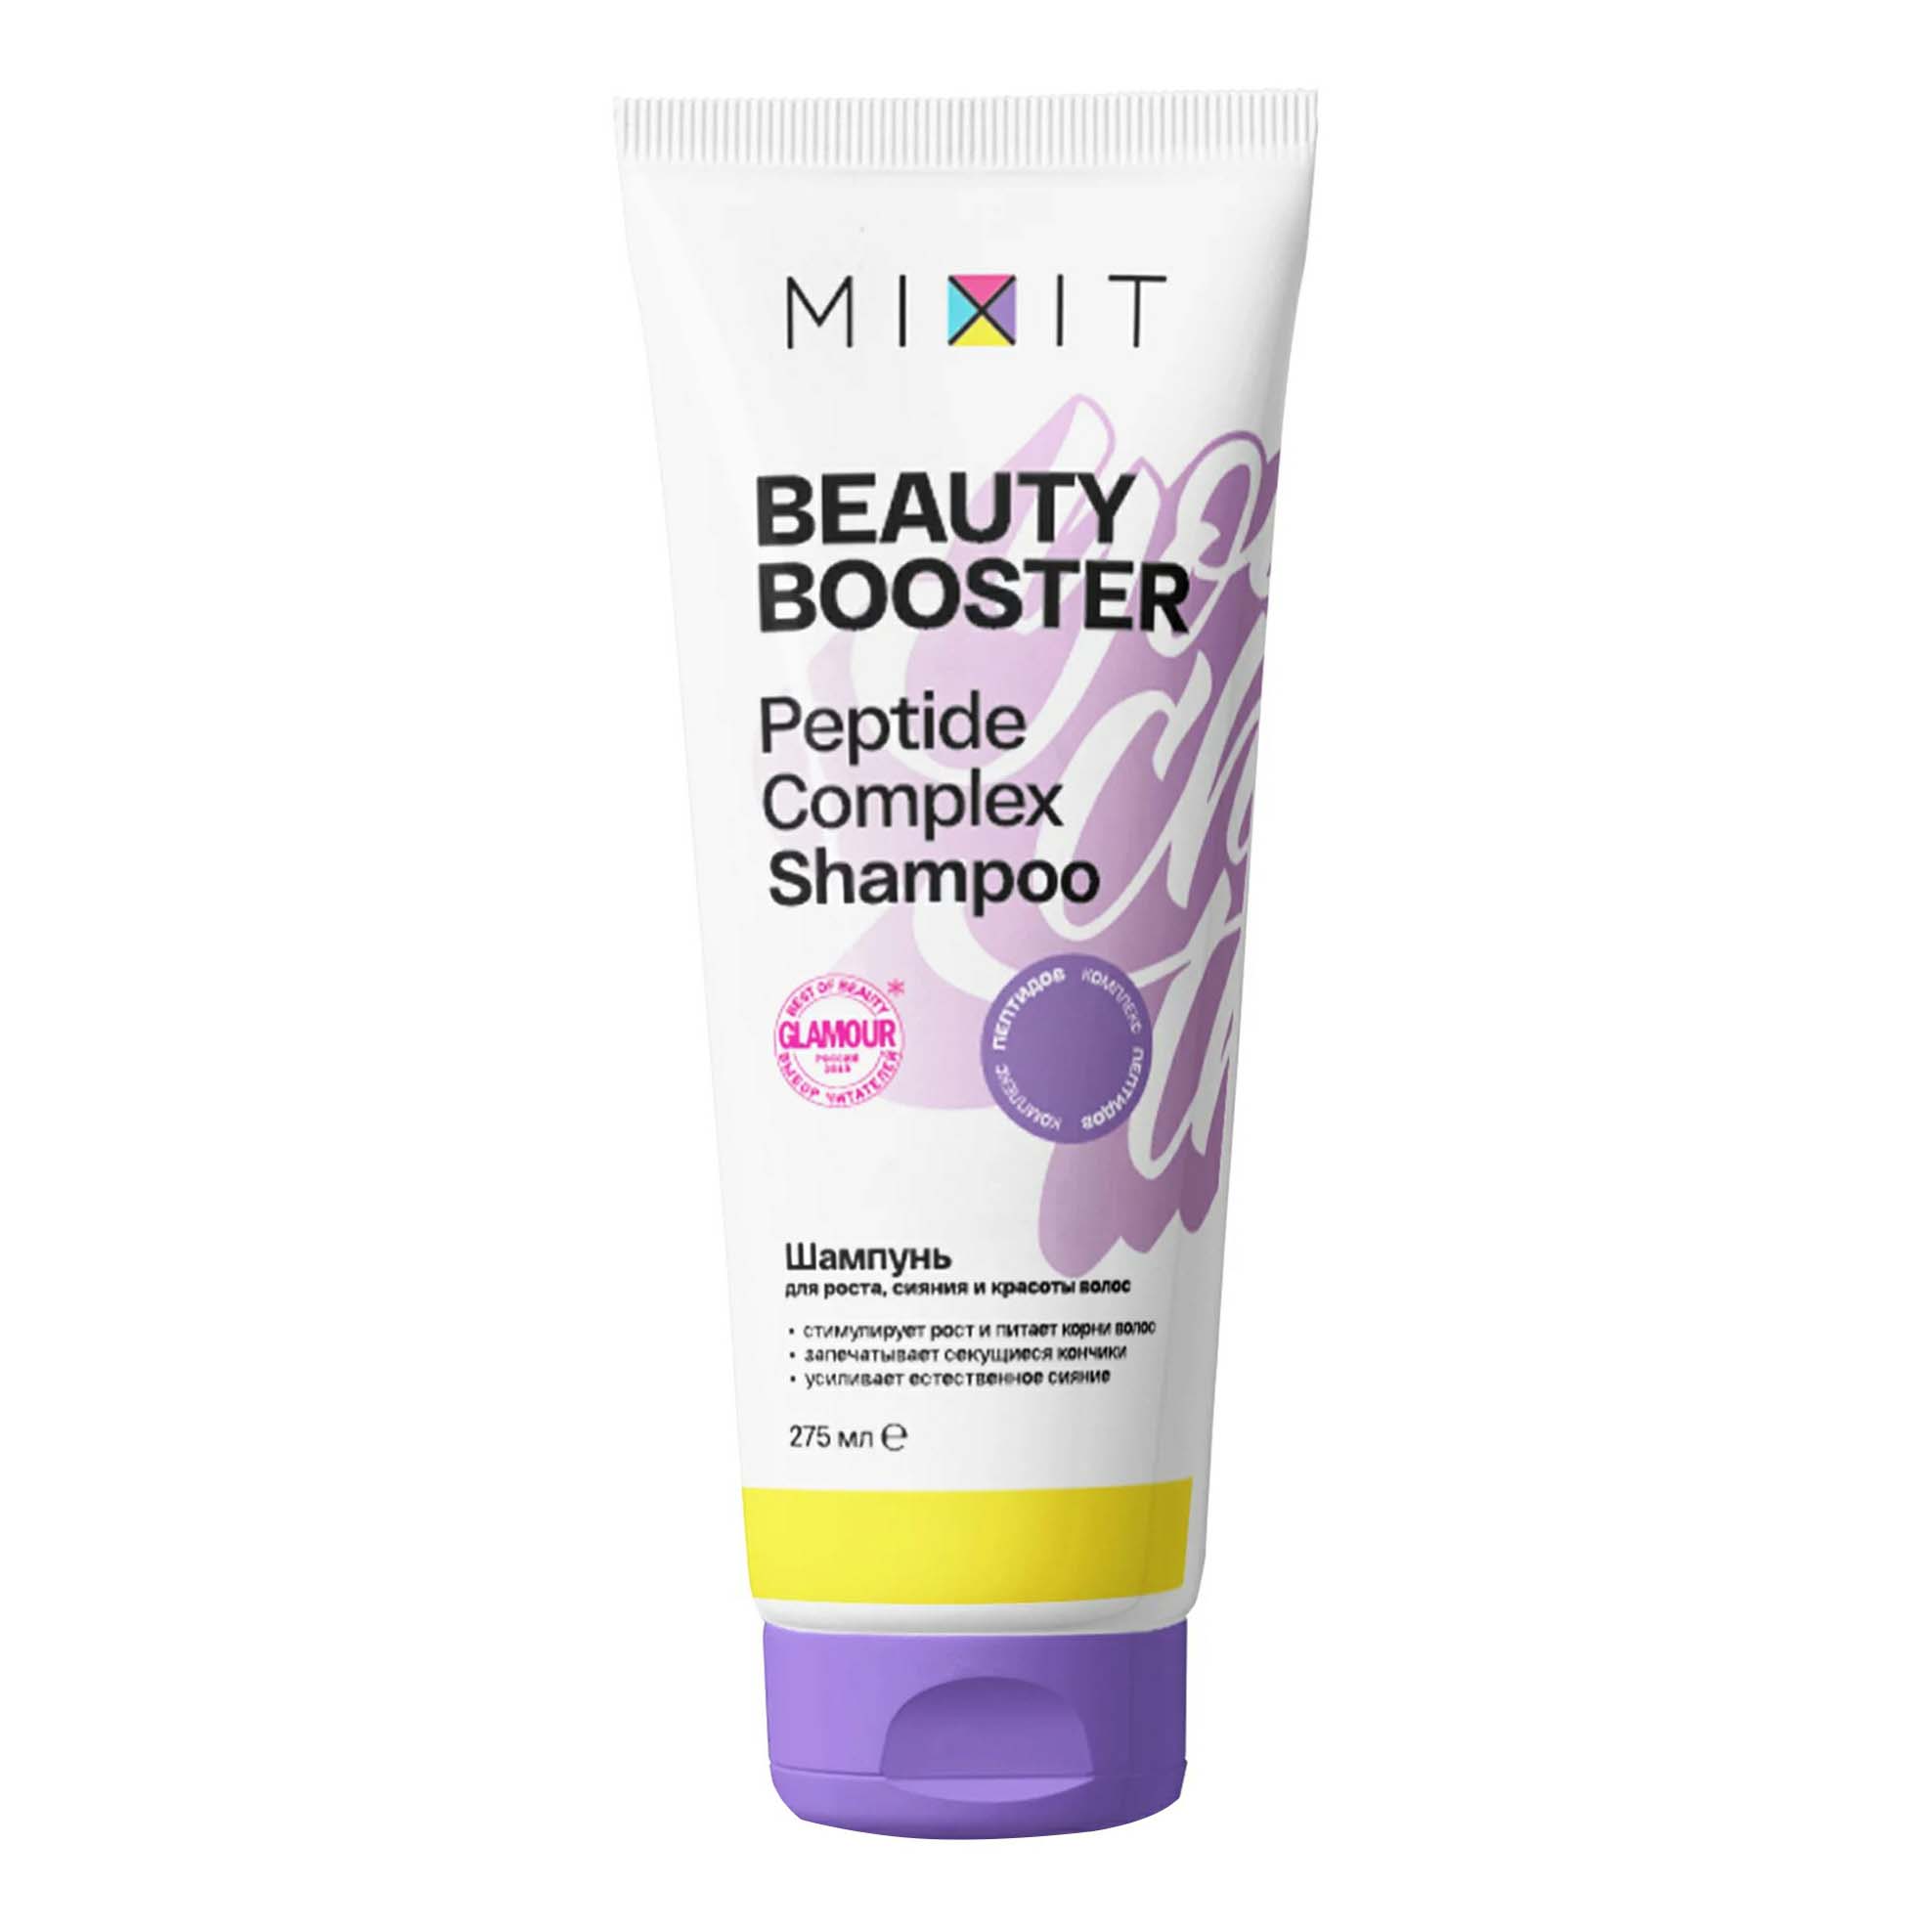 Купить Шампунь Mixit BEAUTY BOOSTER Peptide complex shampoo 275 ml, BEAUTY BOOSTER Peptide complex shampoo, 275 ml